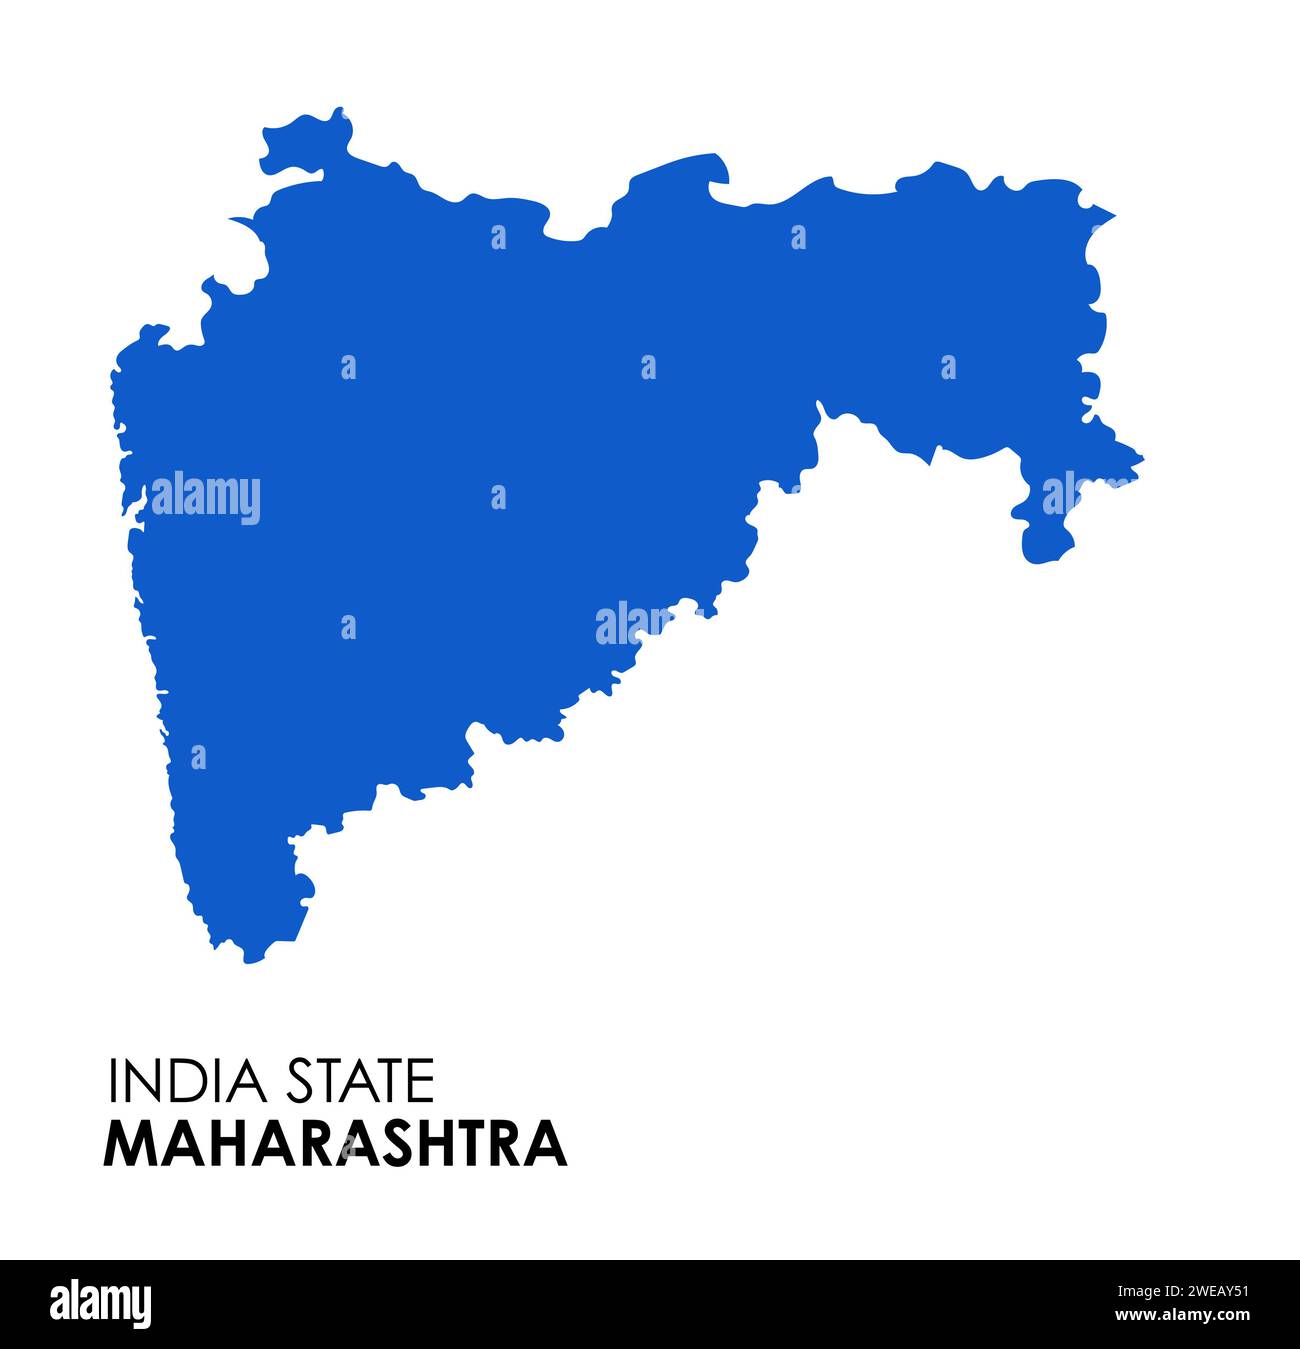 How to draw Maharashtra map drawing - YouTube